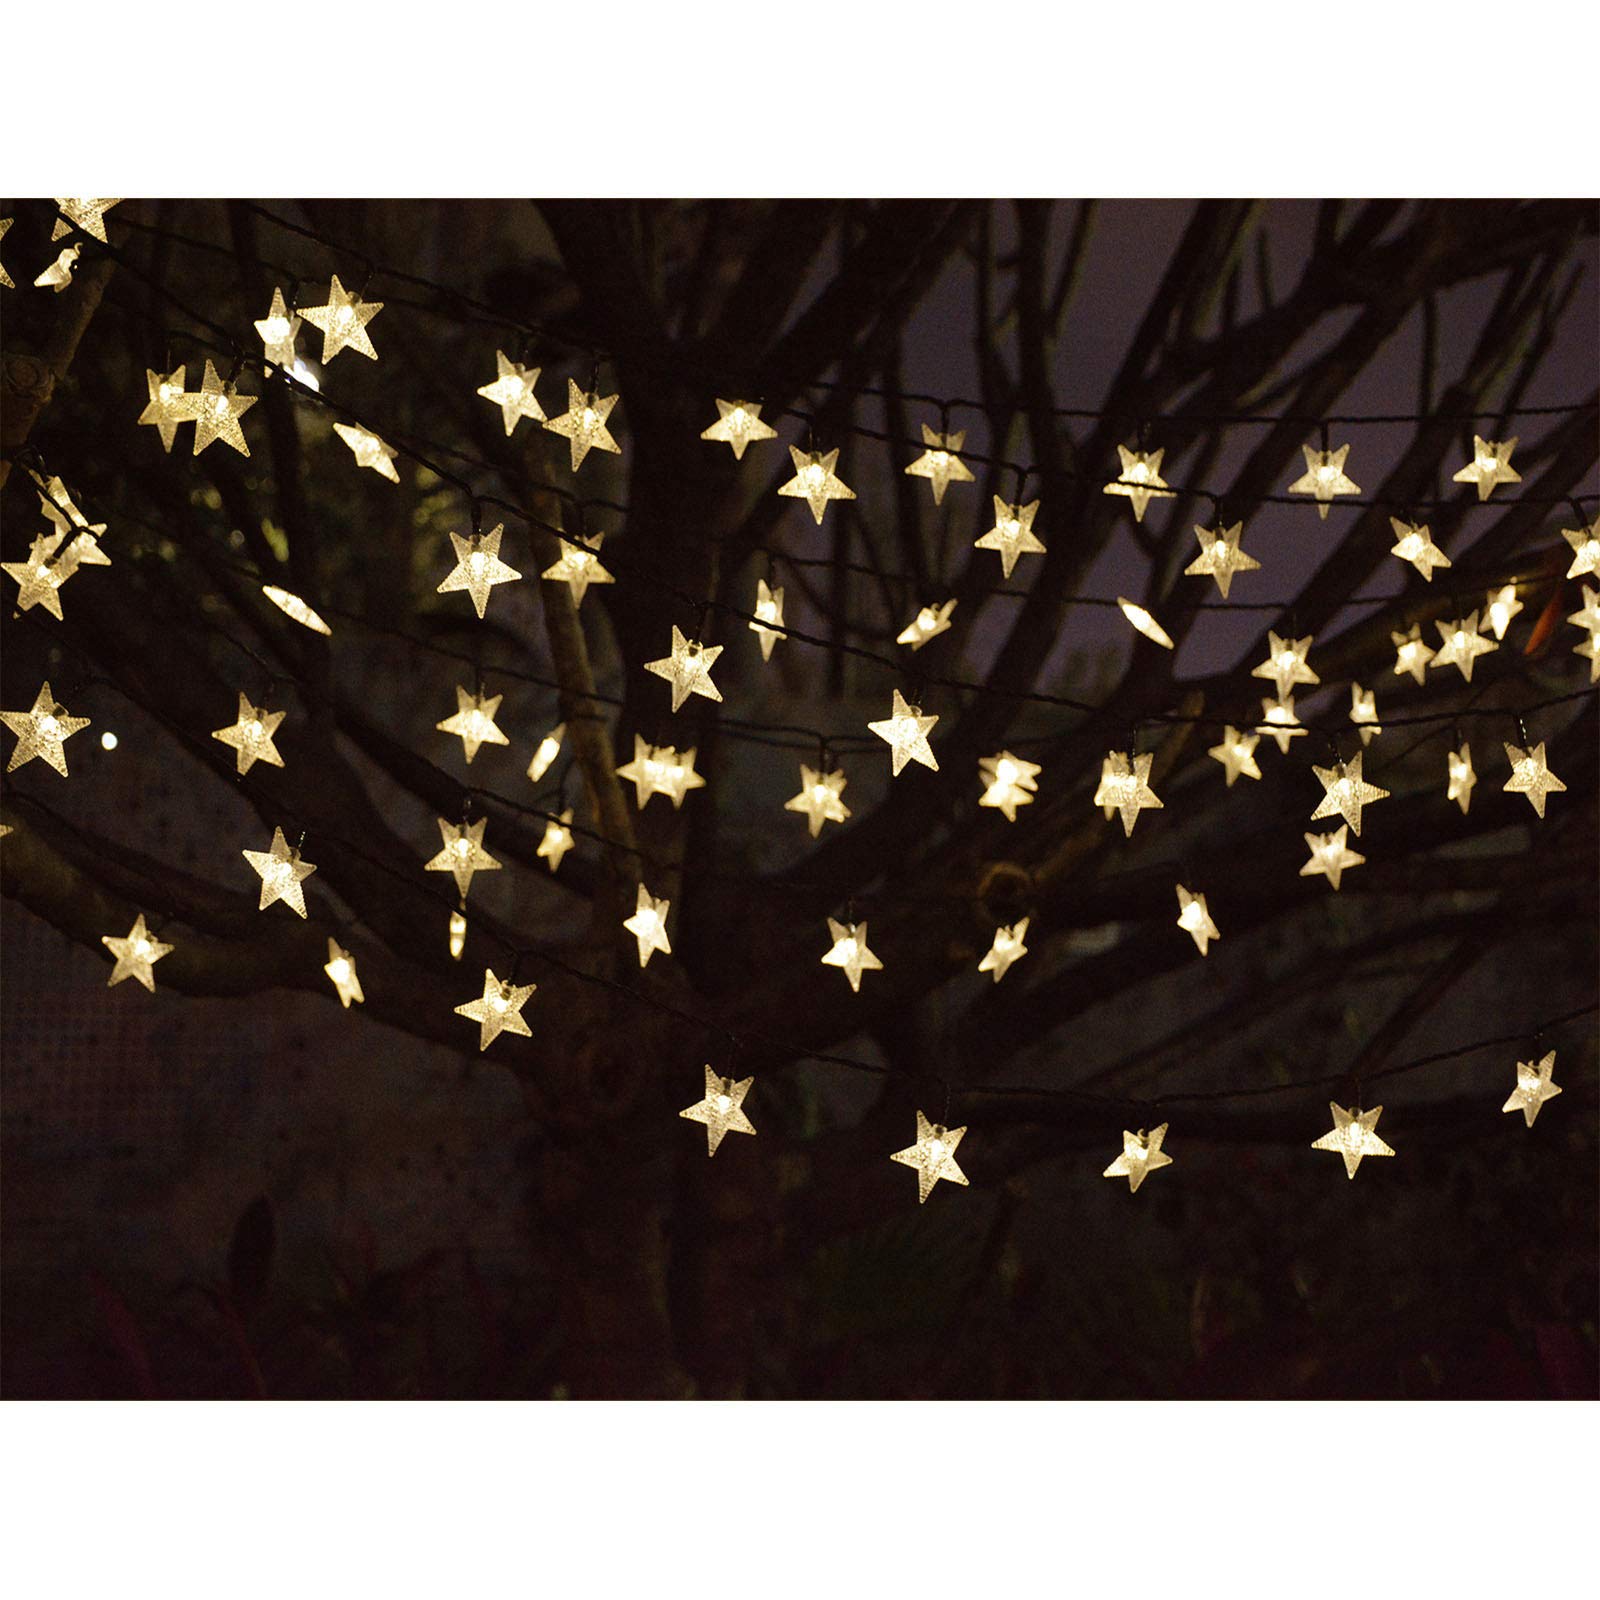 Abkshine 50ft 120 LED Solar Star Fairy Lights, Outdoor Decorative Solar String Lights, Waterproof Ambiance Lighting for Patio Deck,Camper,Gazebo,Girls Themed Room,Garden,Porch,Bush Decor,Warm White